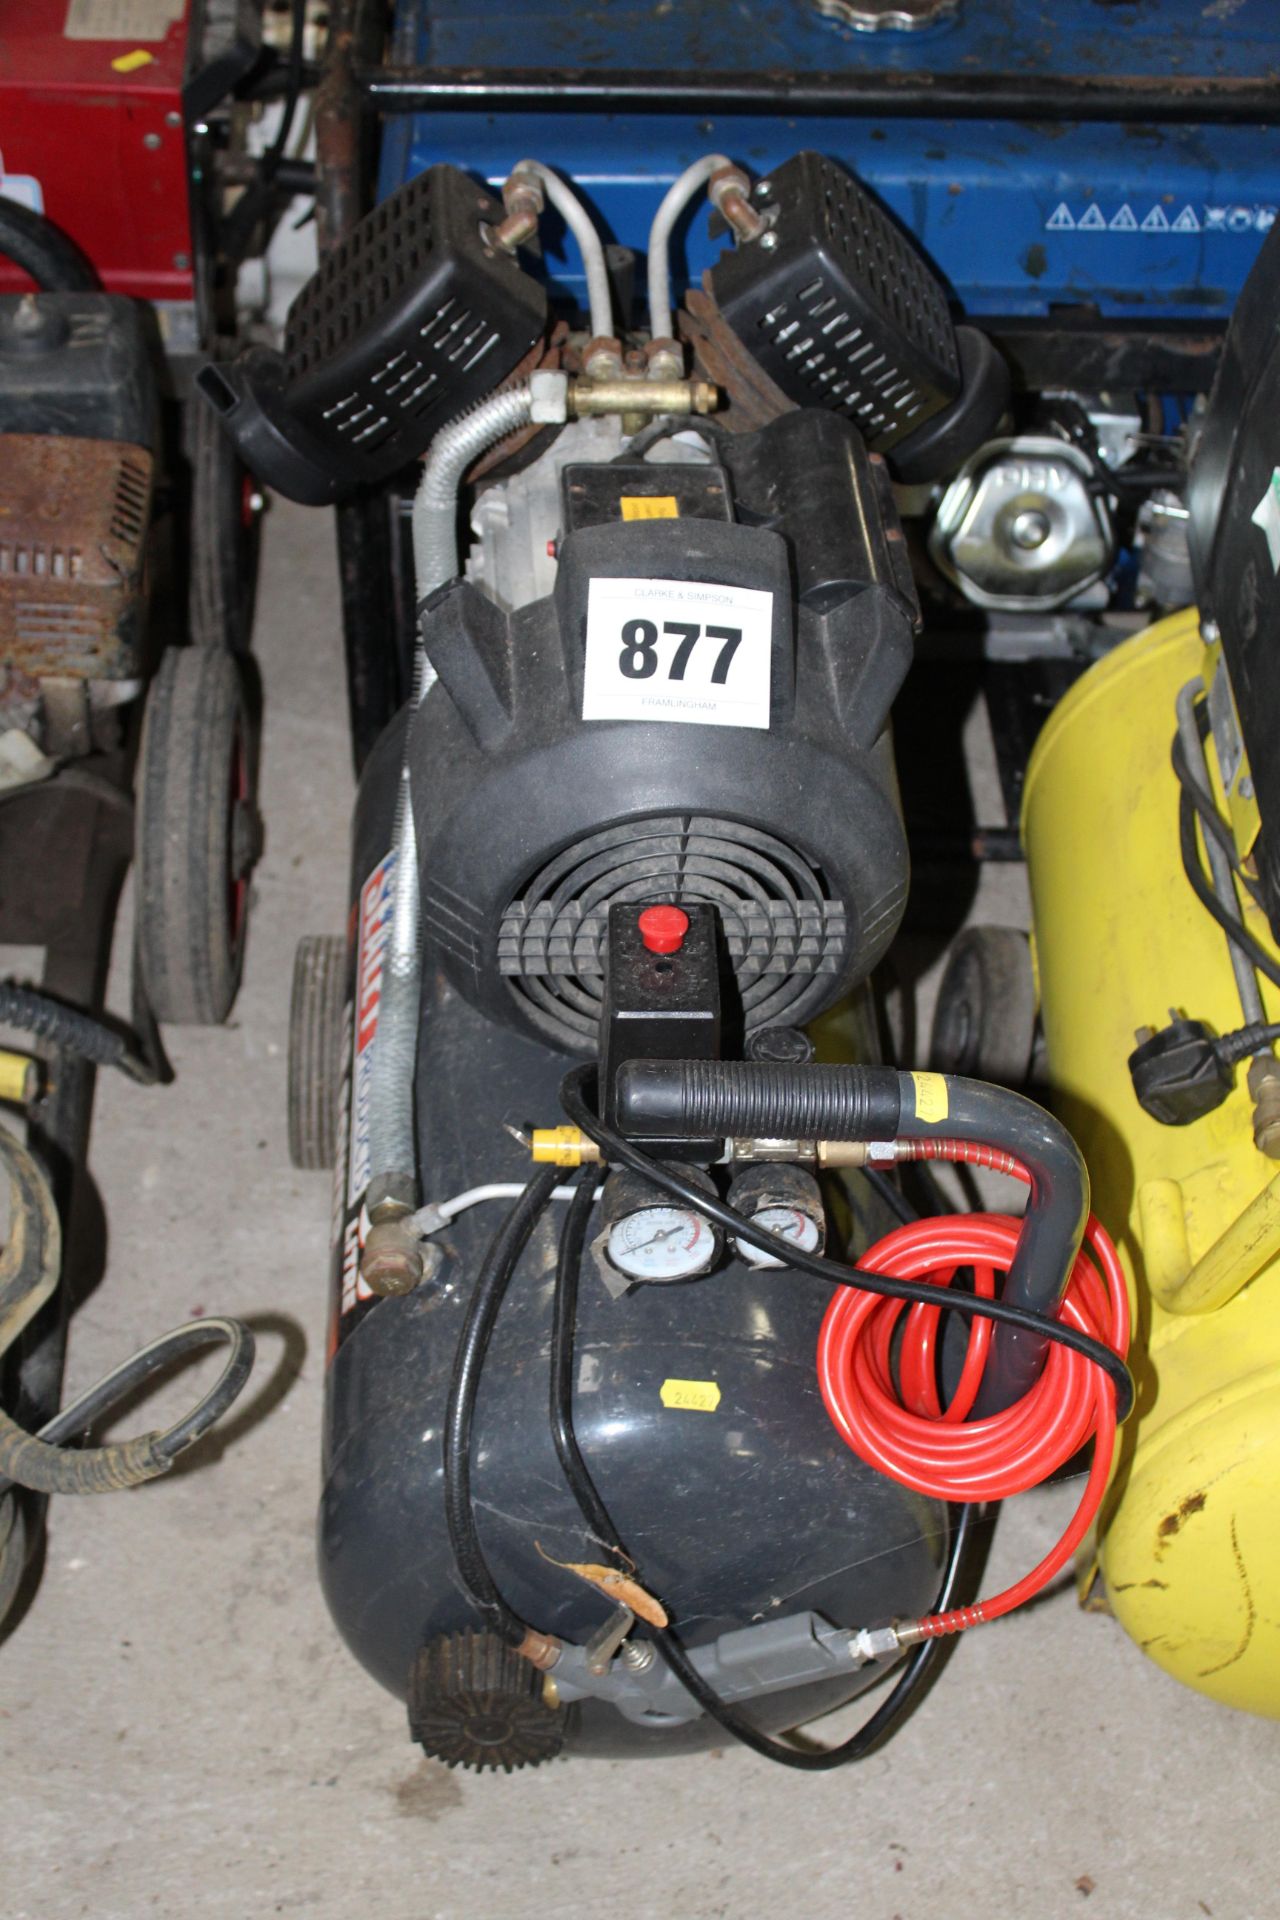 Sealey 50lt workshop compressor. For sale due to sale of farm. - Image 3 of 4